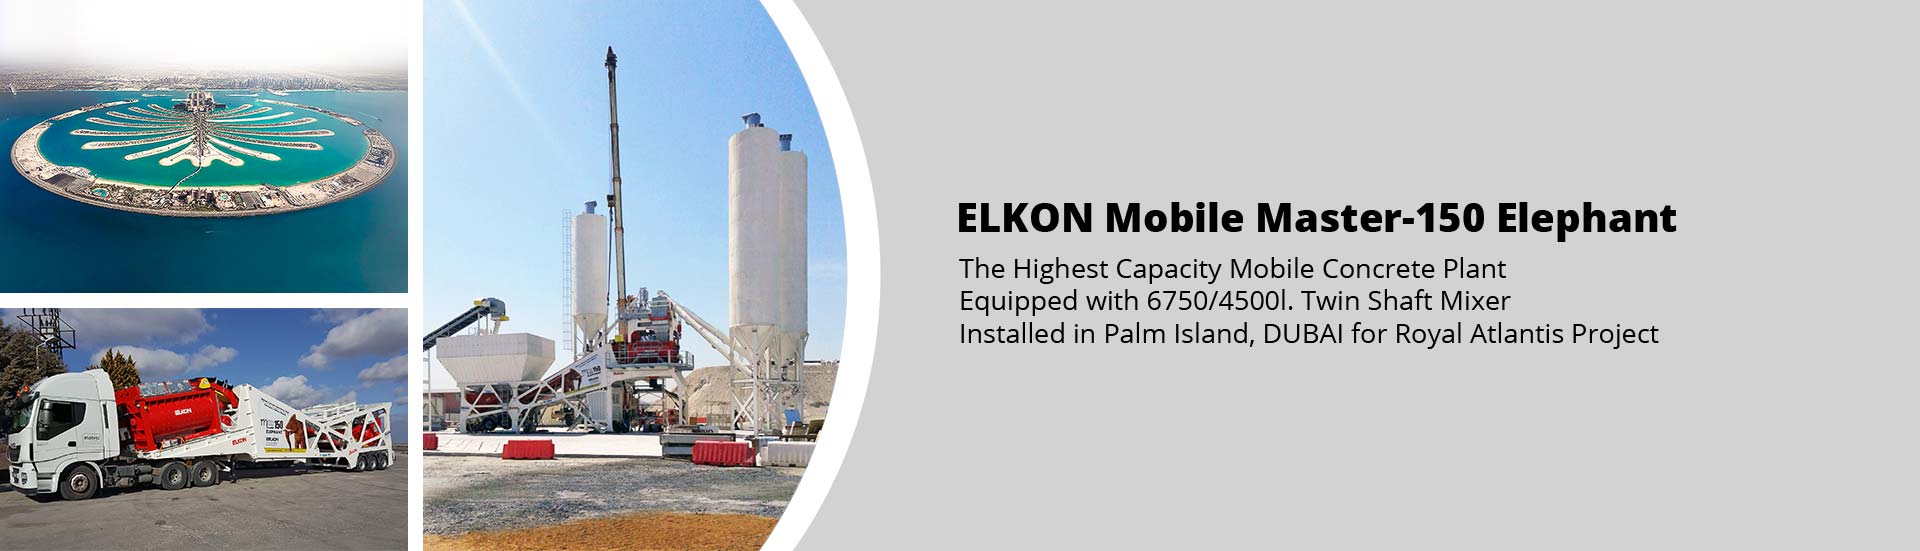 ELKON Mobile Master-150 Elephant